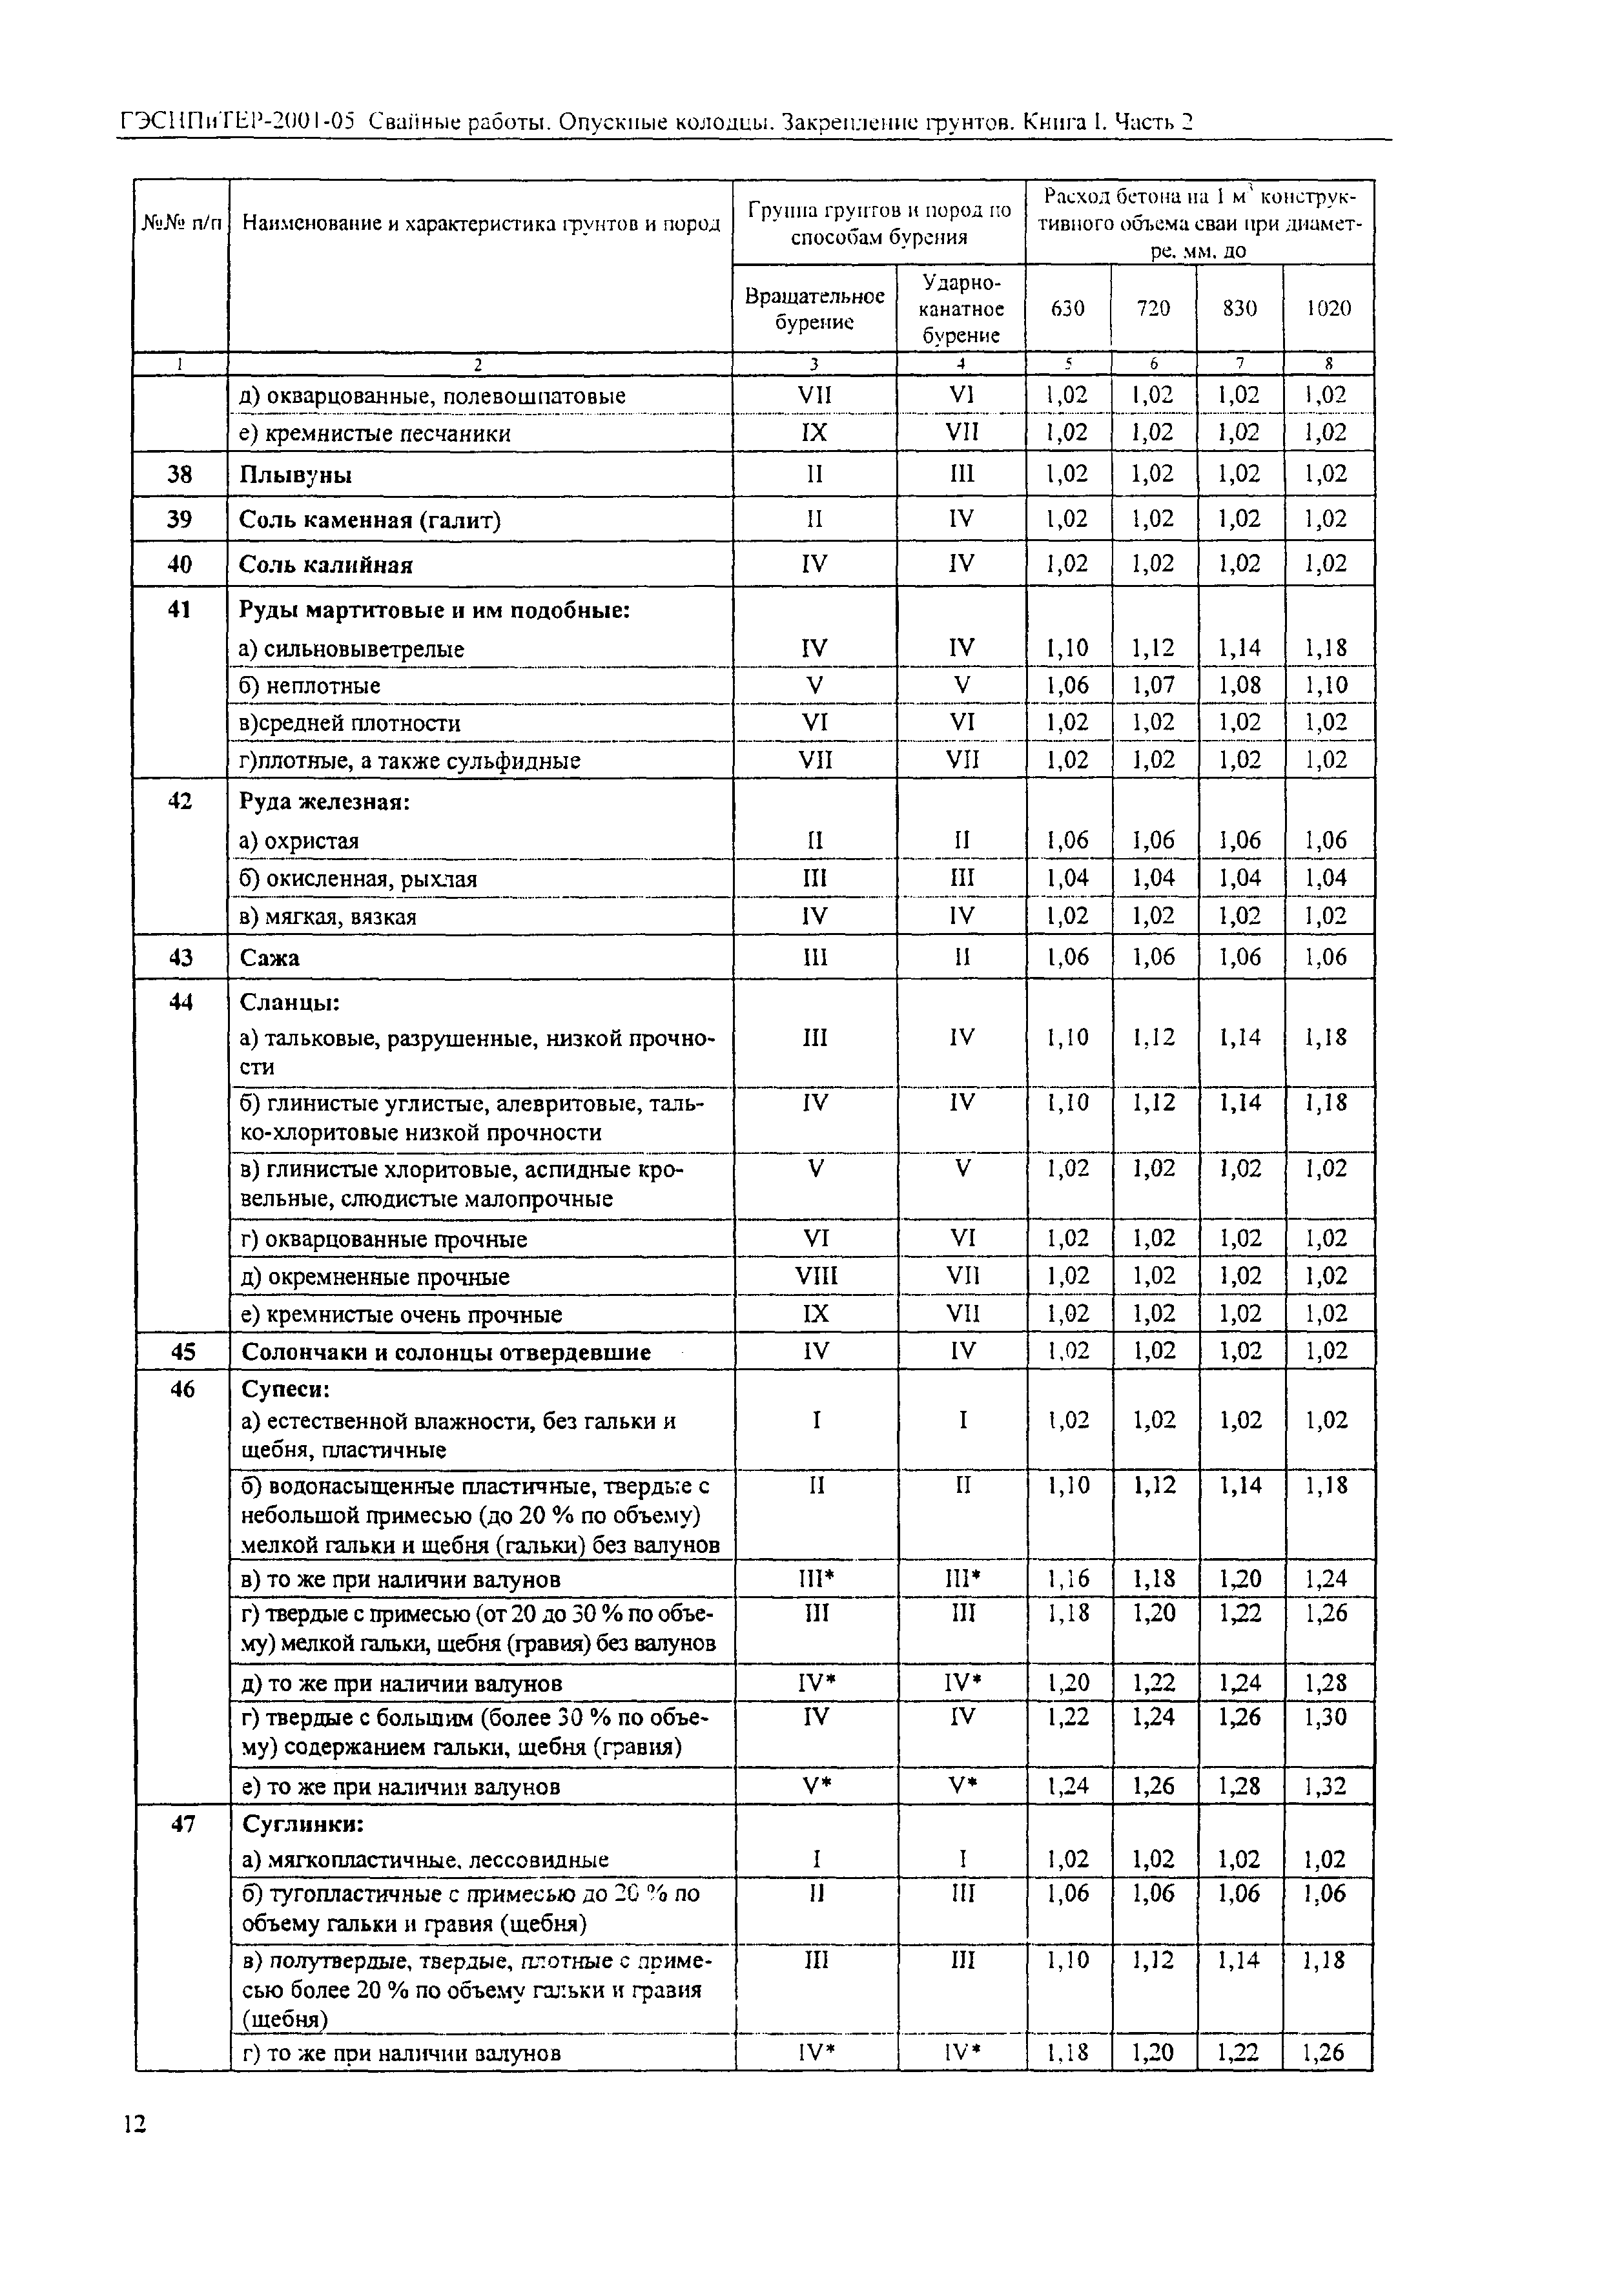 ГЭСНПиТЕР 2001-05 (II)